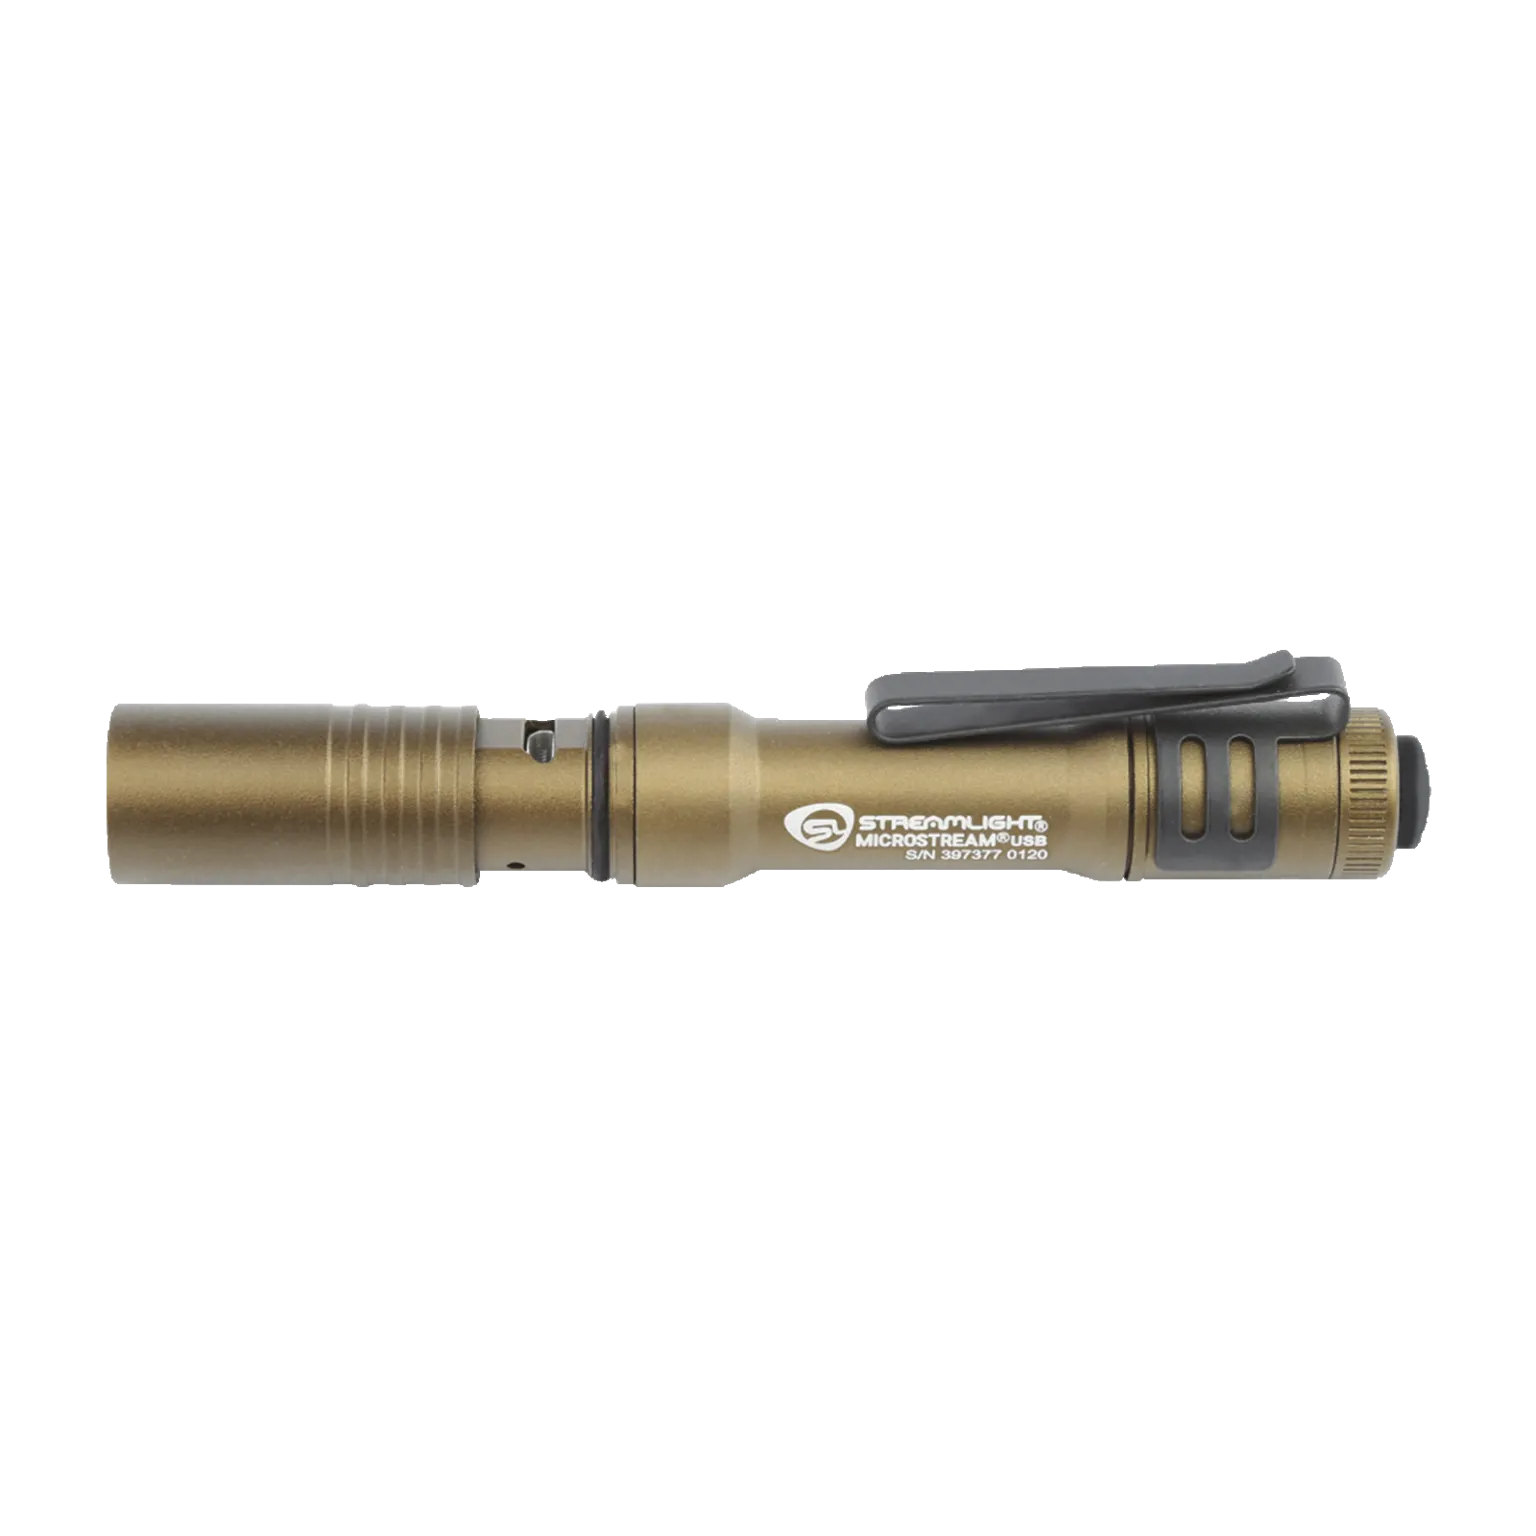 Torche : Streamlight - Marron/beige avec logo Aimpoint®  - 1